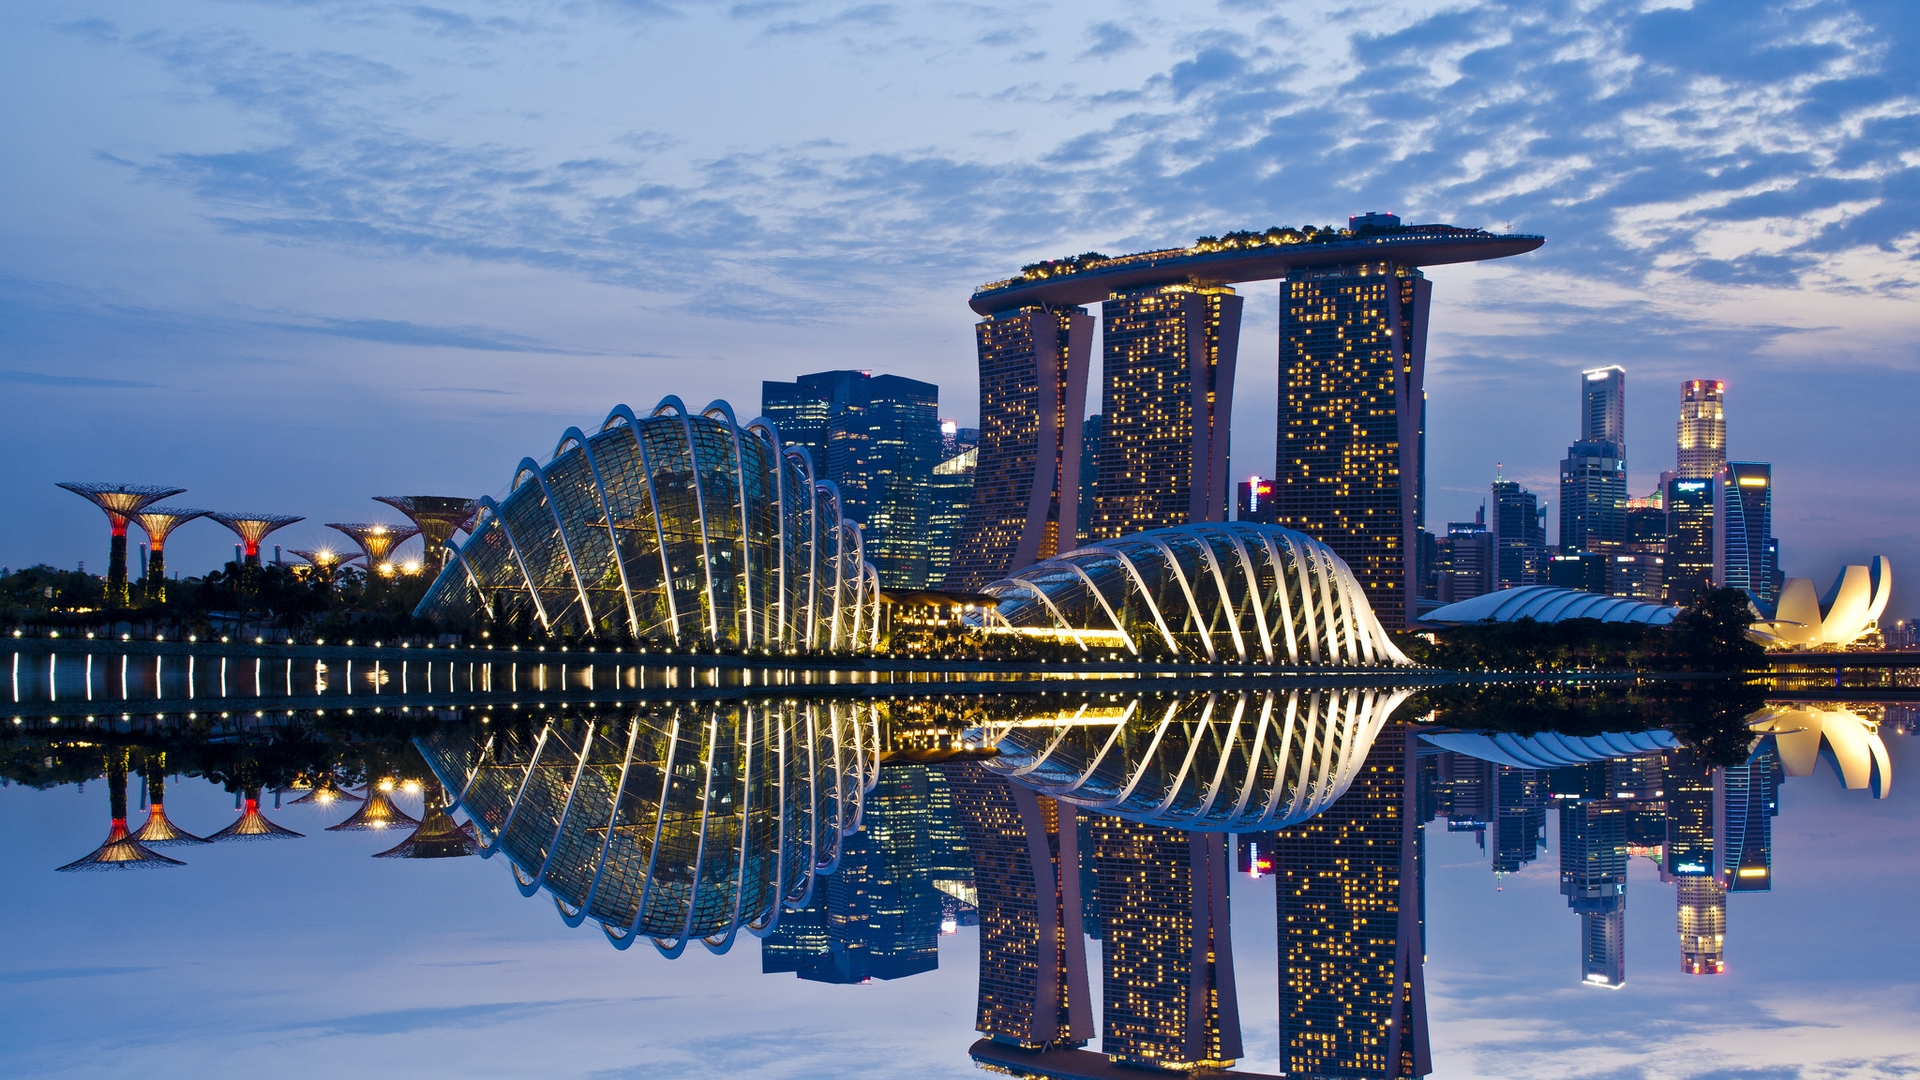 Image: Singapore, Marina Bay Sands, Hotel, building, architecture, landmark, water, reflection, sky, evening